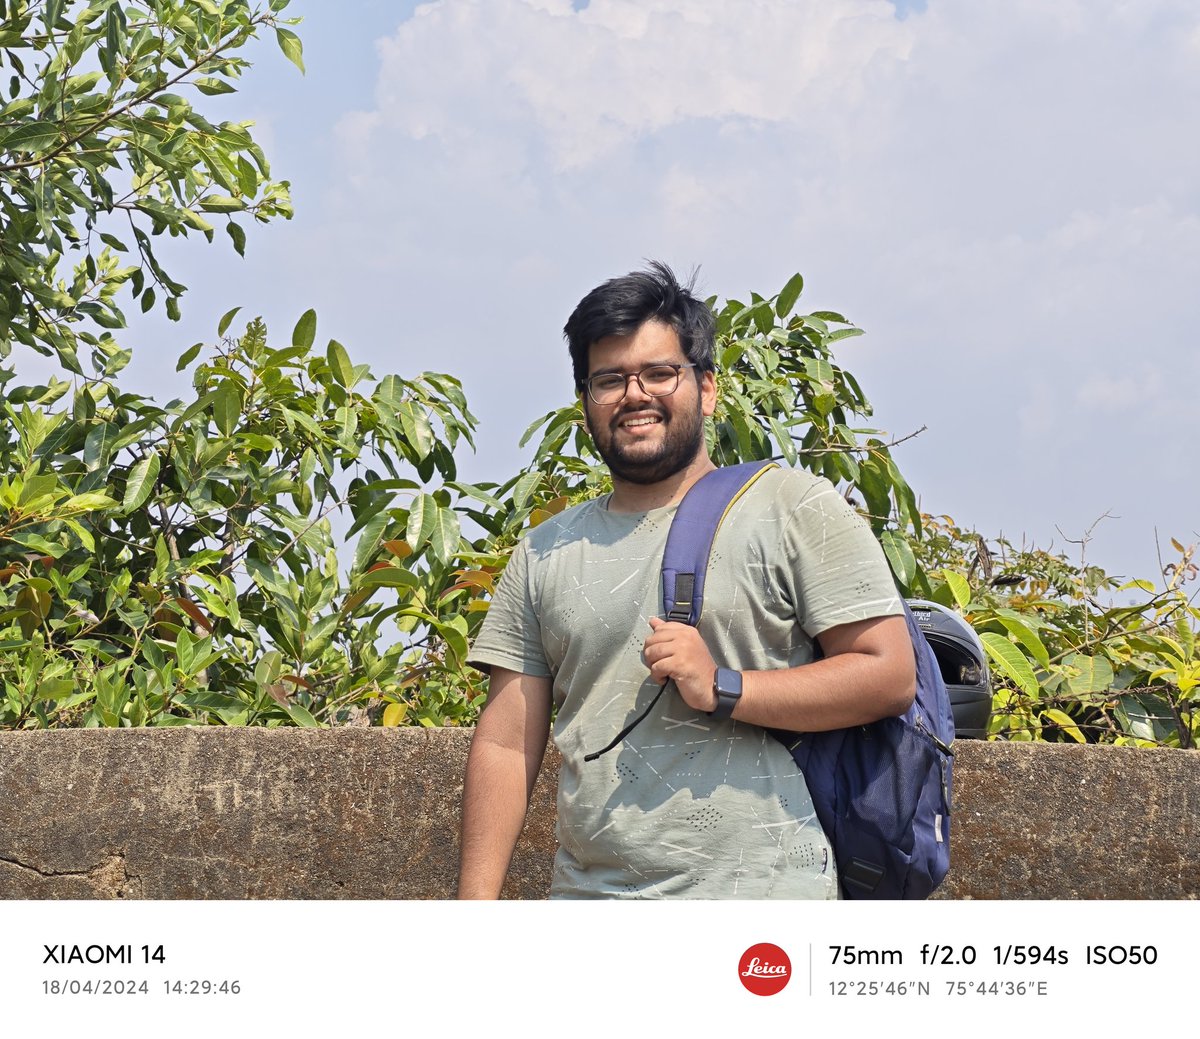 Standing tall amidst lush greenery, Madikeri Fort
#ShotonXiaomi14
#Xiaomi14
#Madikeri
#MadikeriFort
#Coorg
#ExploreKarnataka